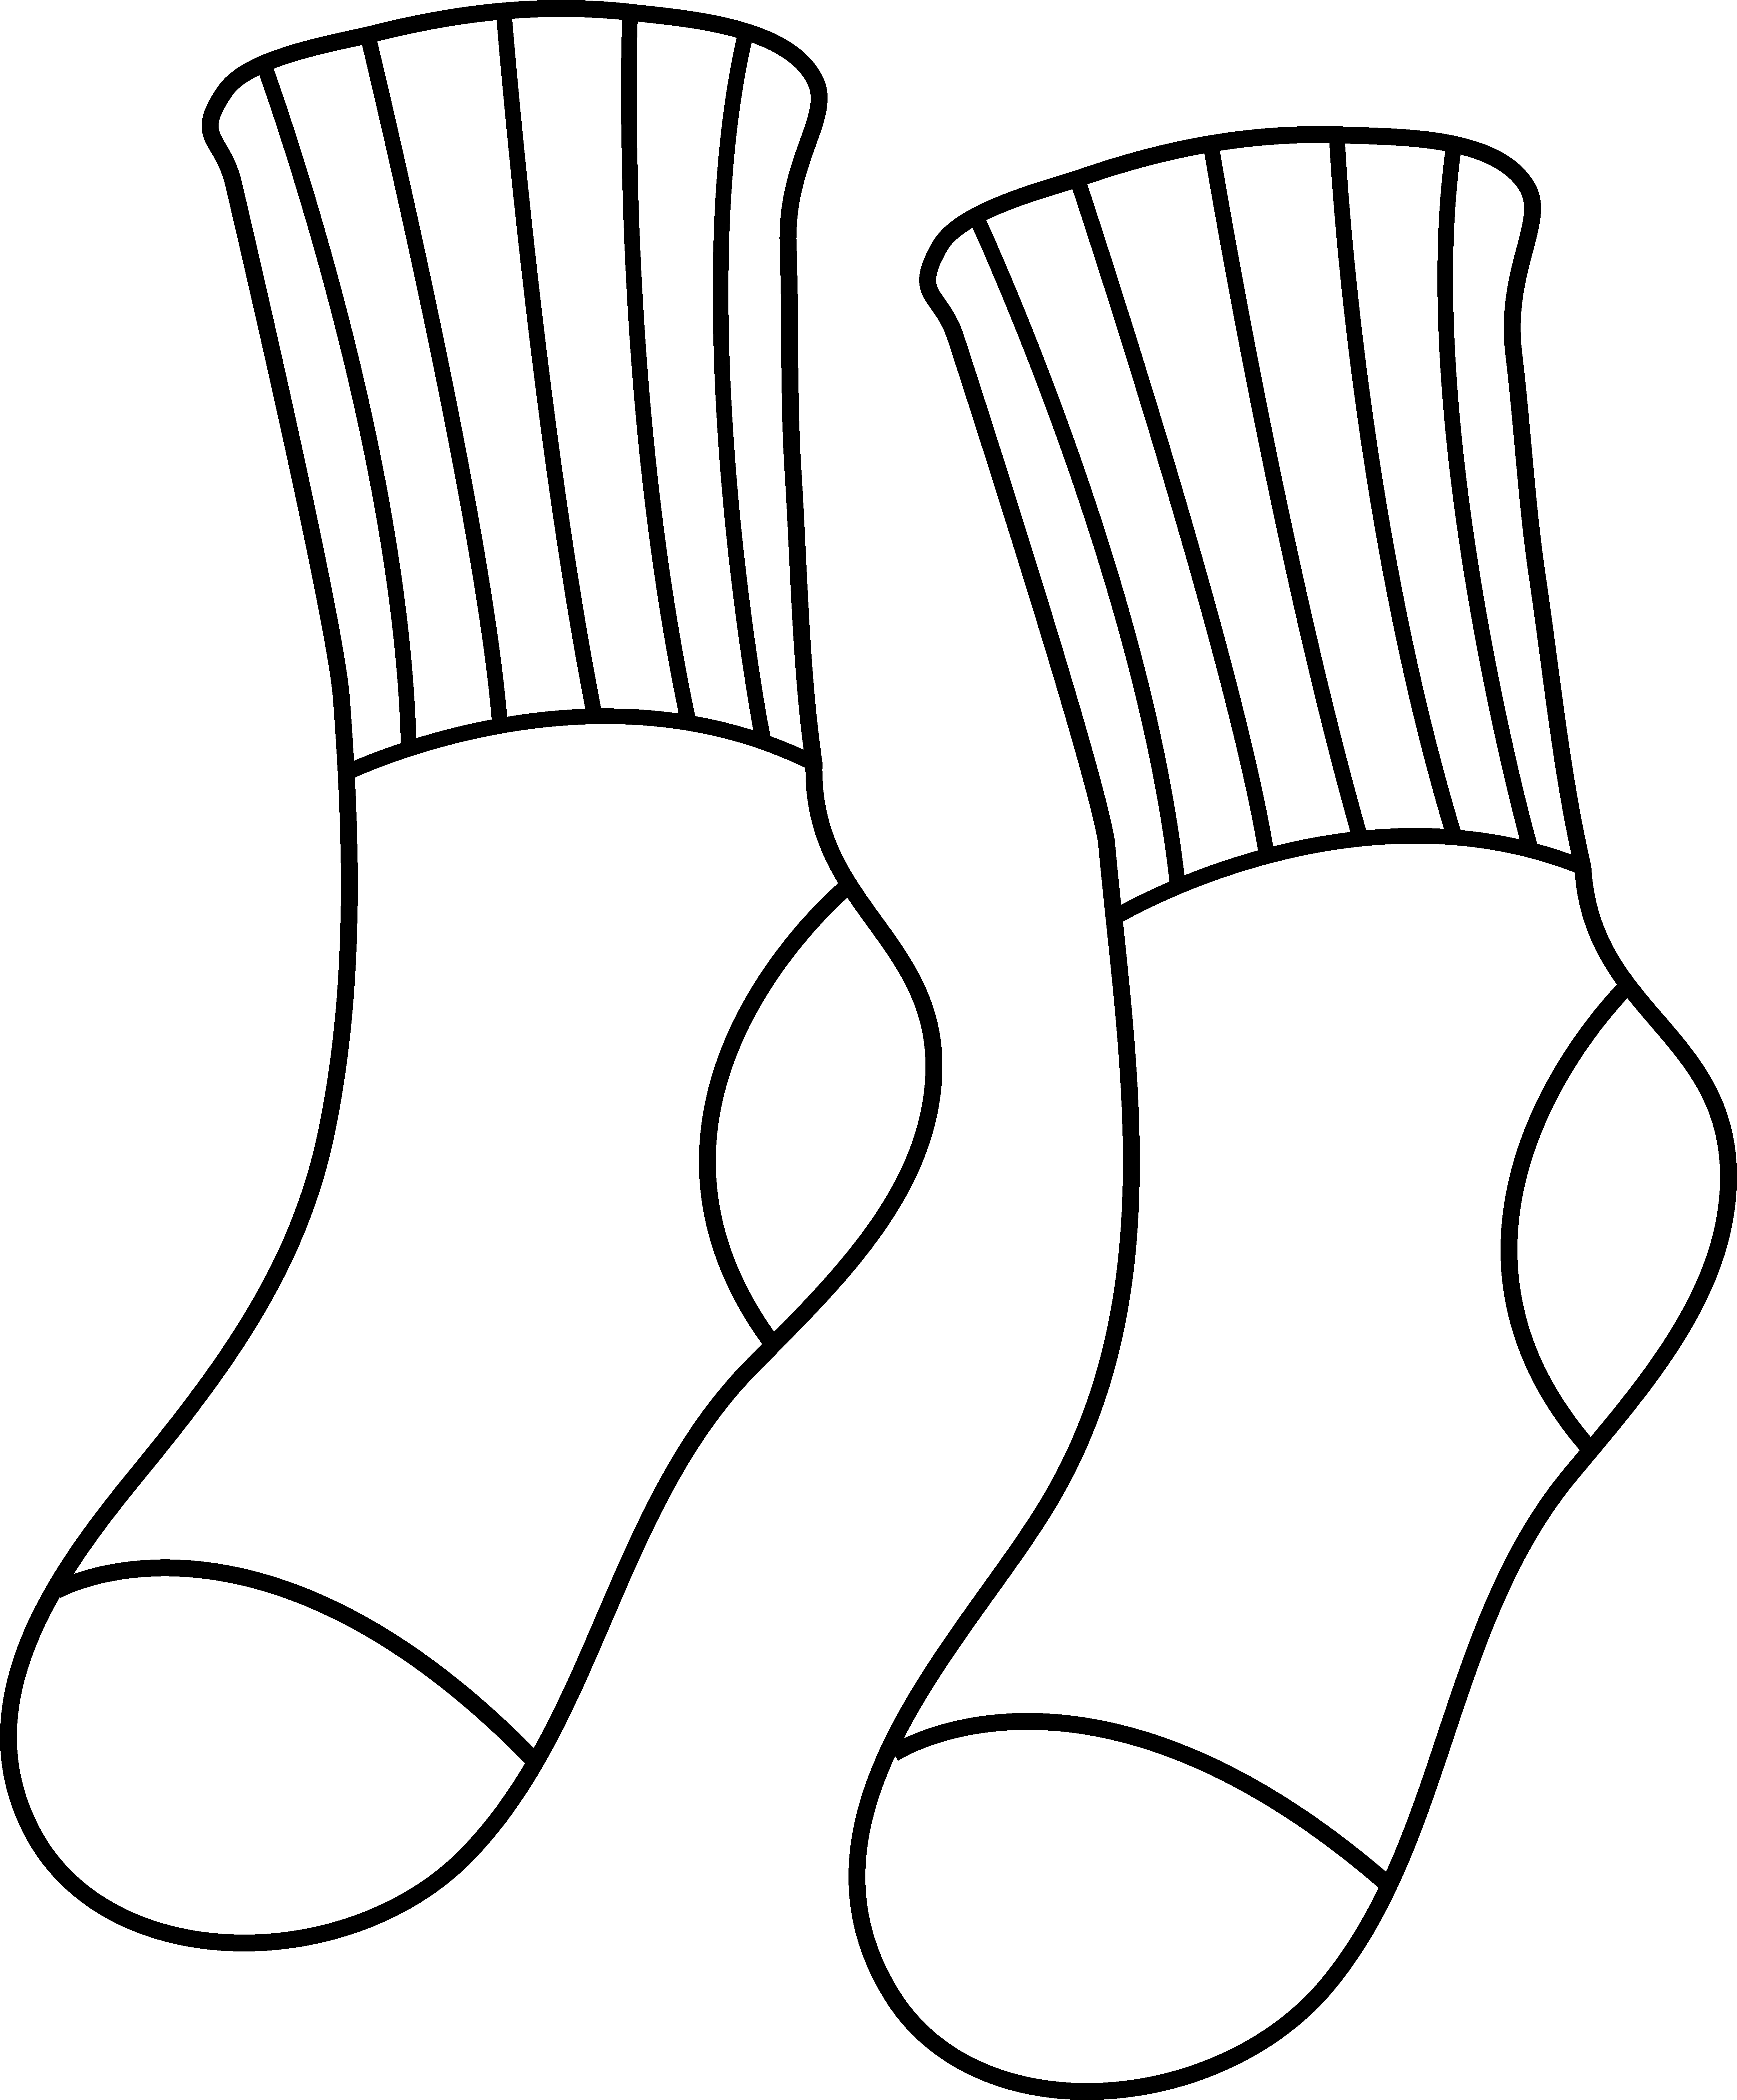 Socks Printable Template